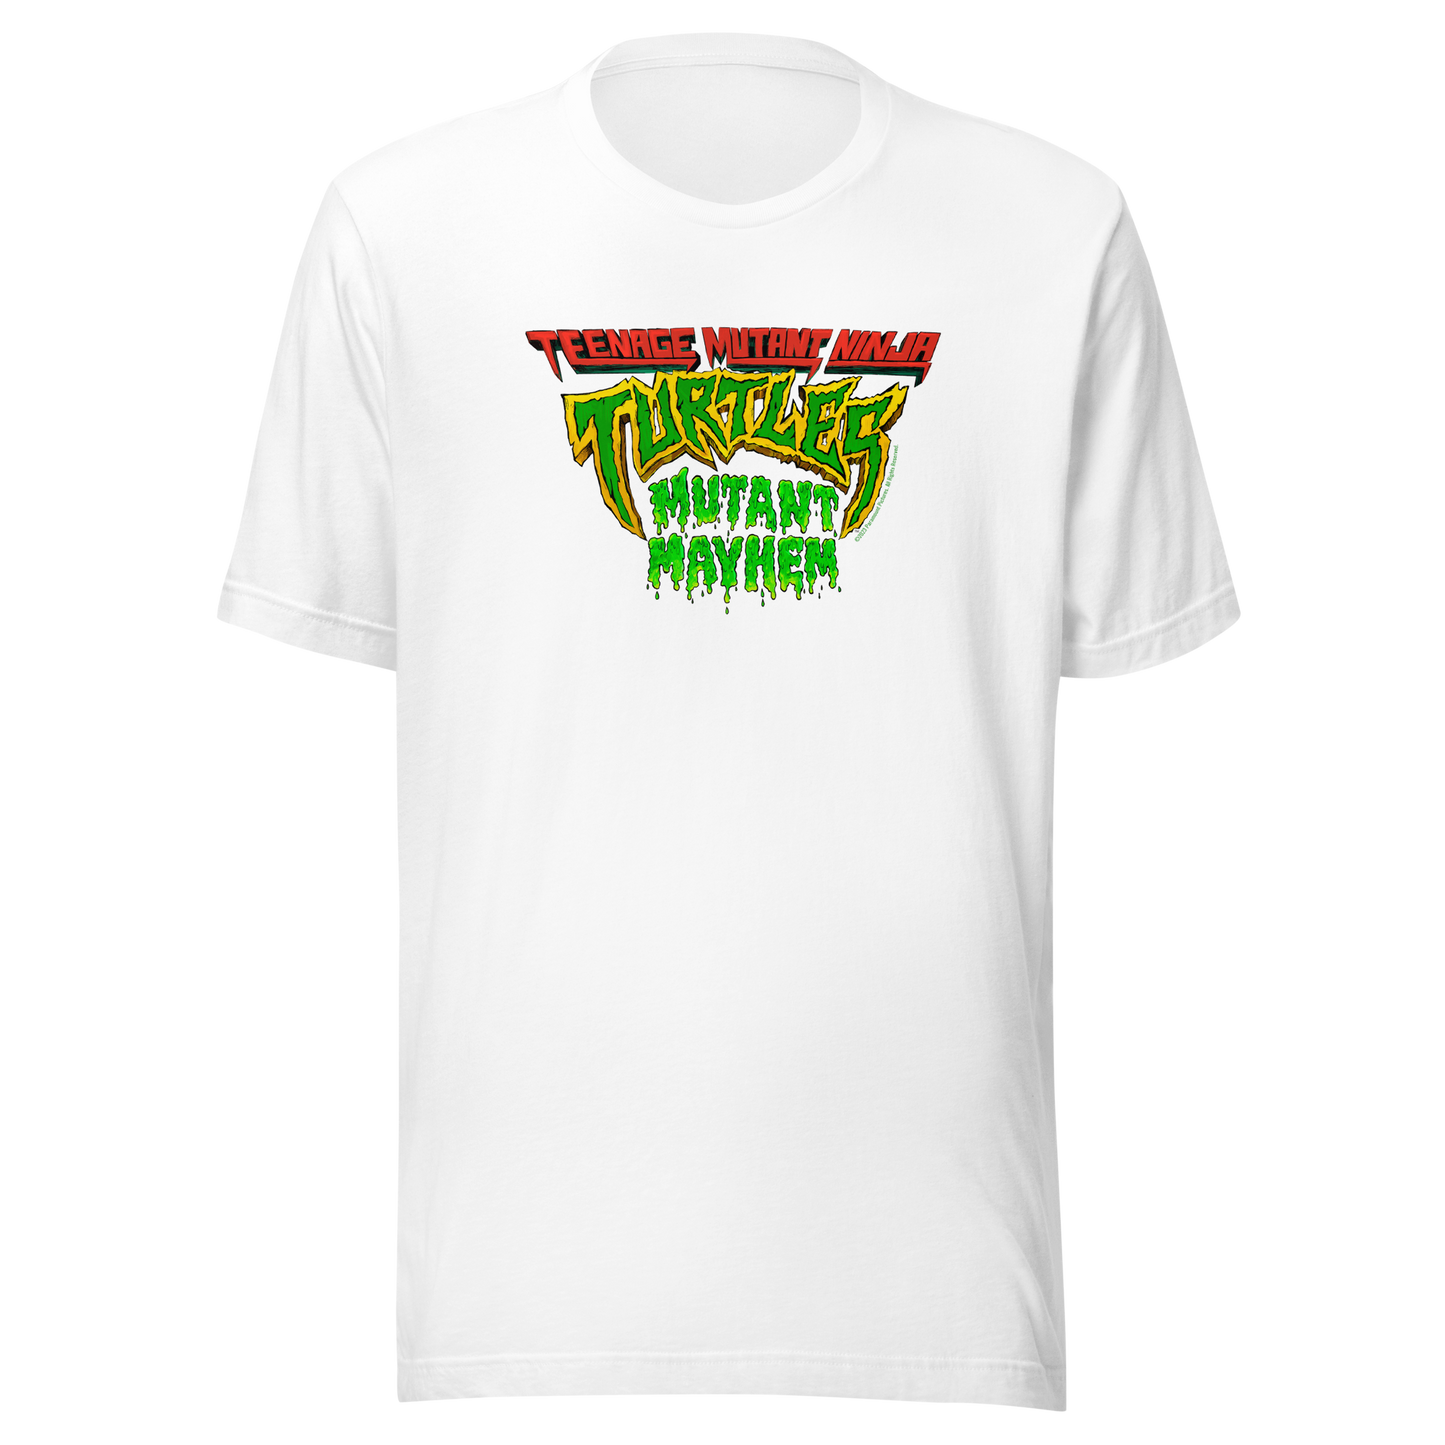 Unisex Teenage Mutant Ninja Turtles™ Graphic T-Shirt for Toddler